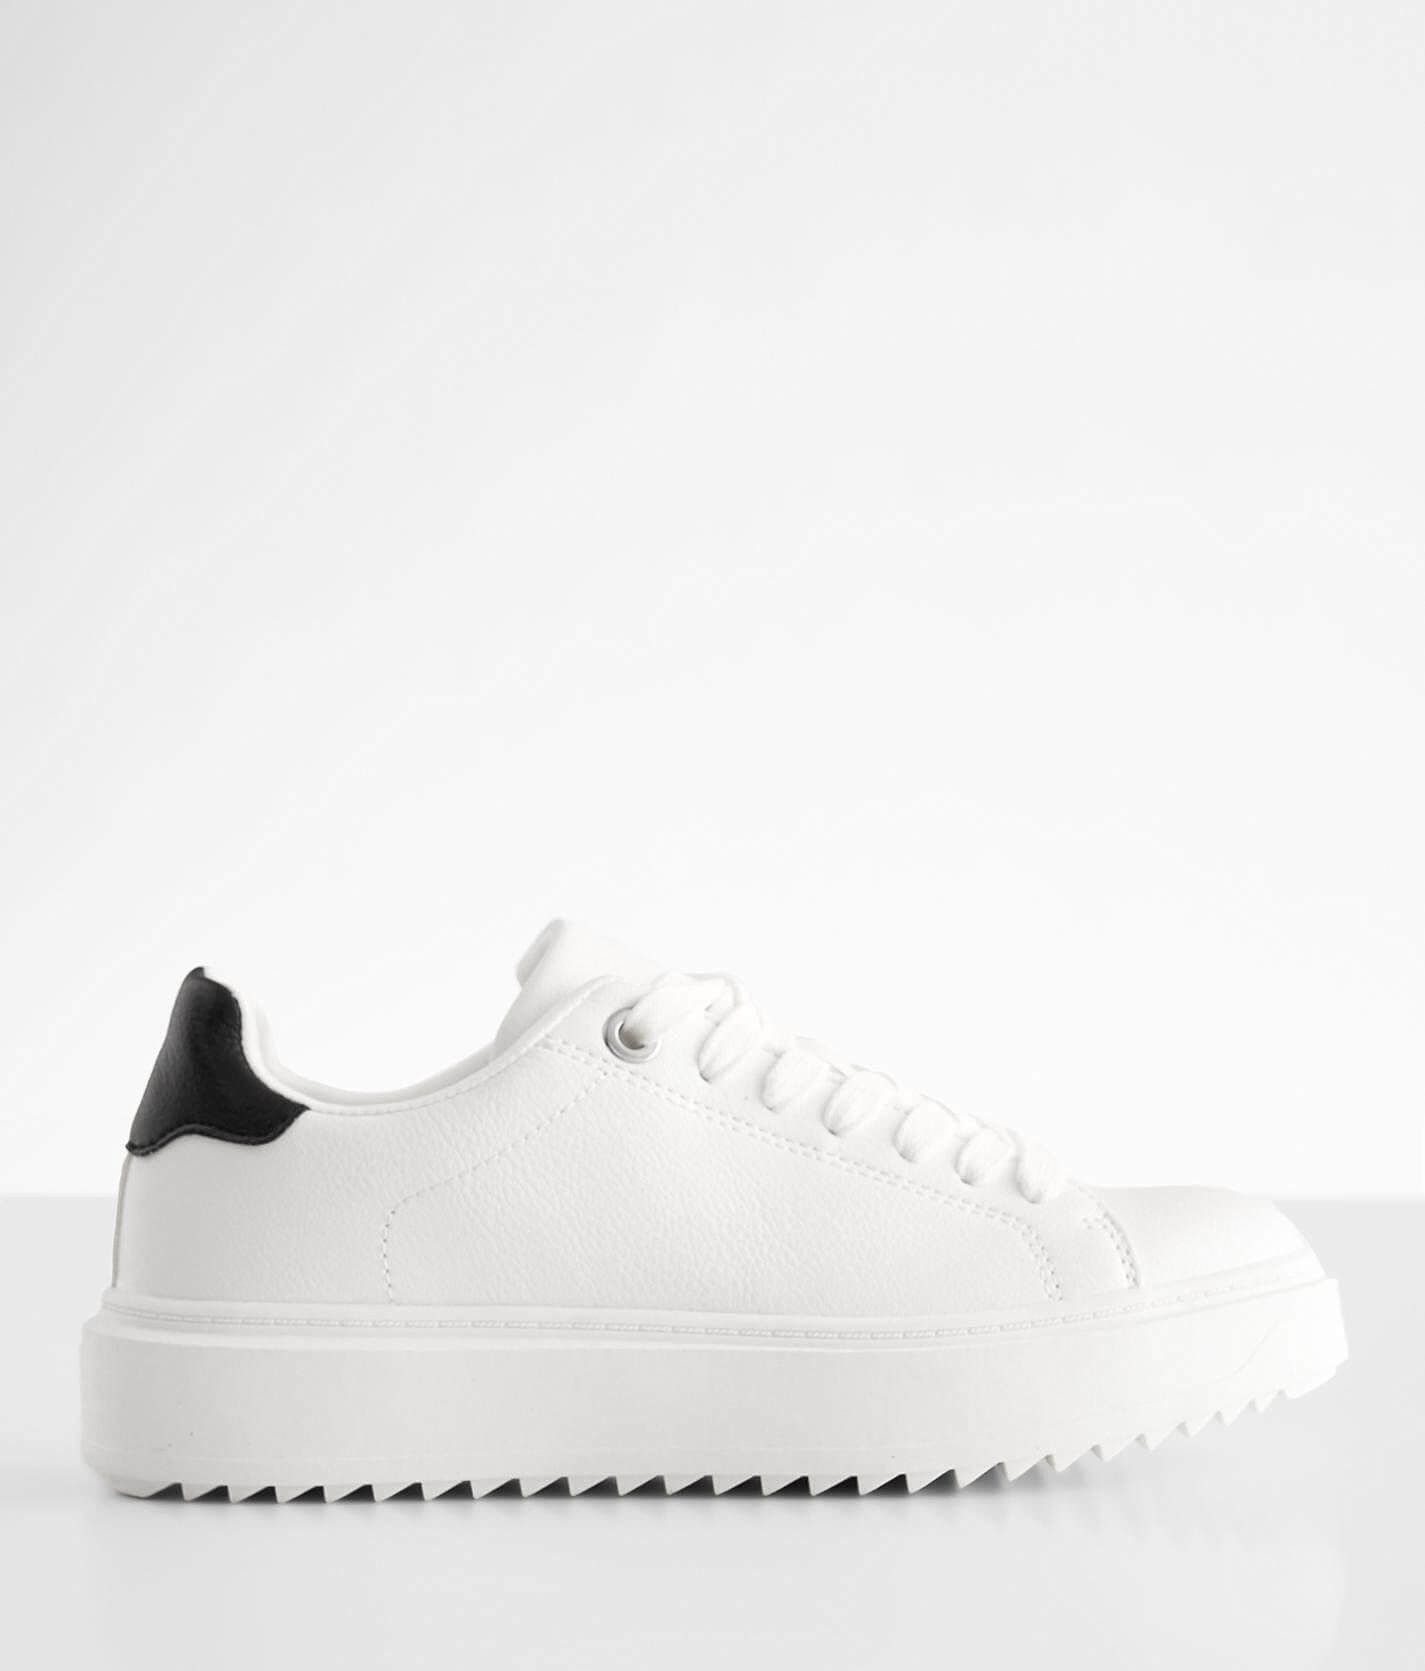 Steve Madden Catcher Sneaker - Women's Shoes in White Black | Buckle